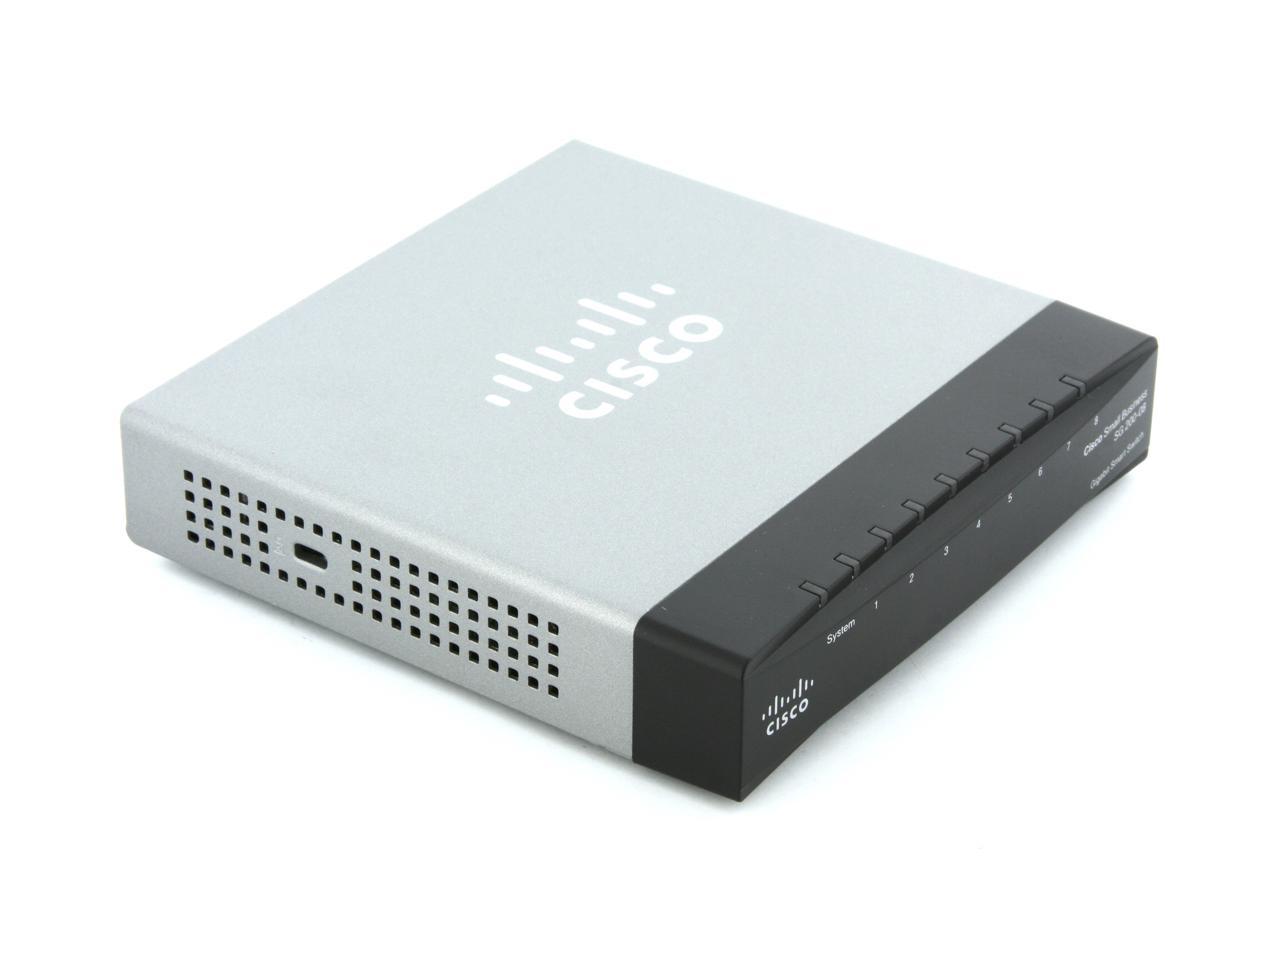 Cisco Small Business 200 Series SLM2008T-NA Gigabit Ethernet 